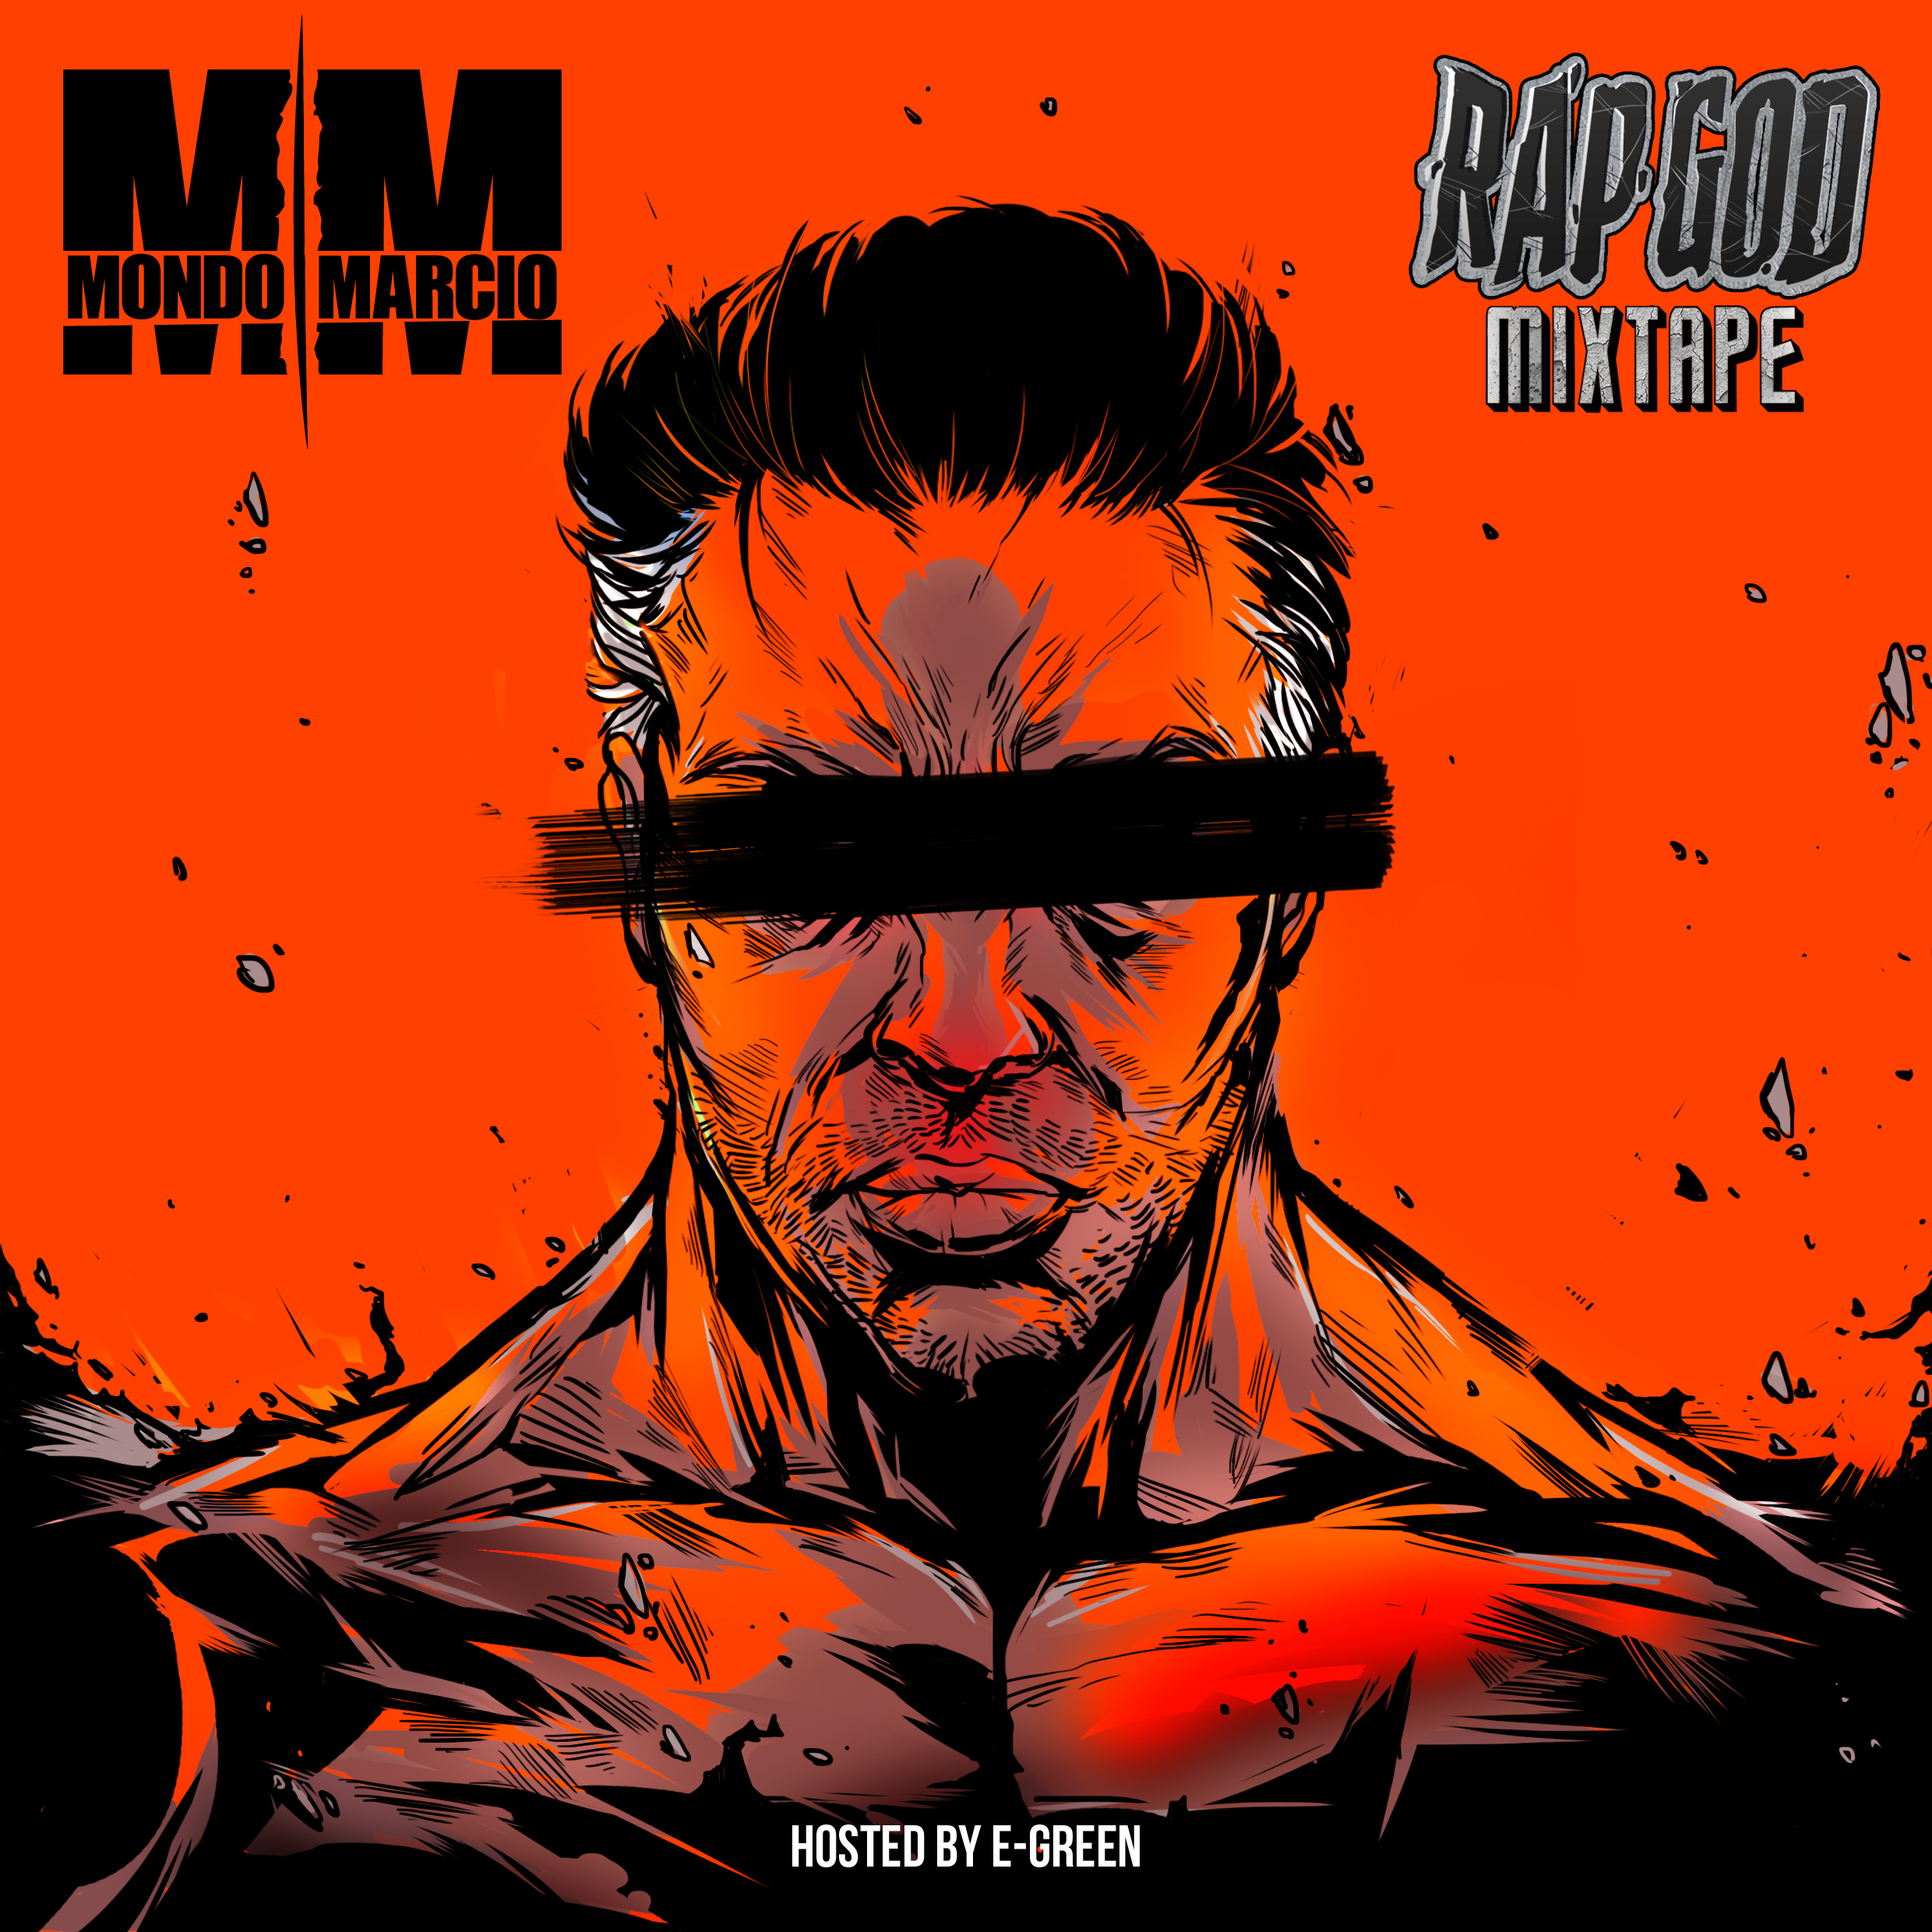 Mondo_Marcio_Rap_God_Mixtape